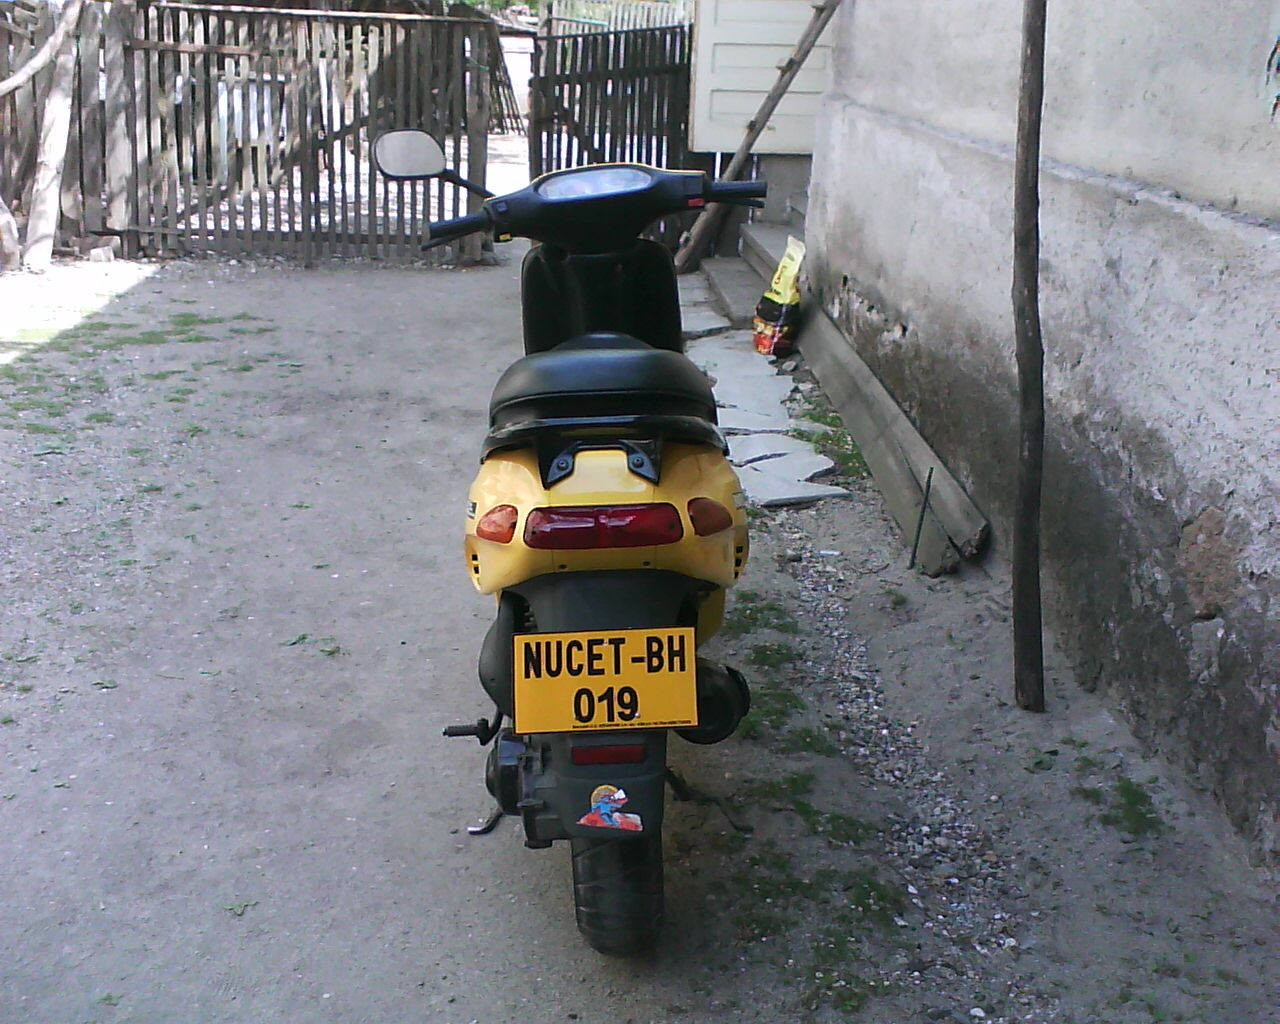 vanzare Piaggio nrg vand scooter